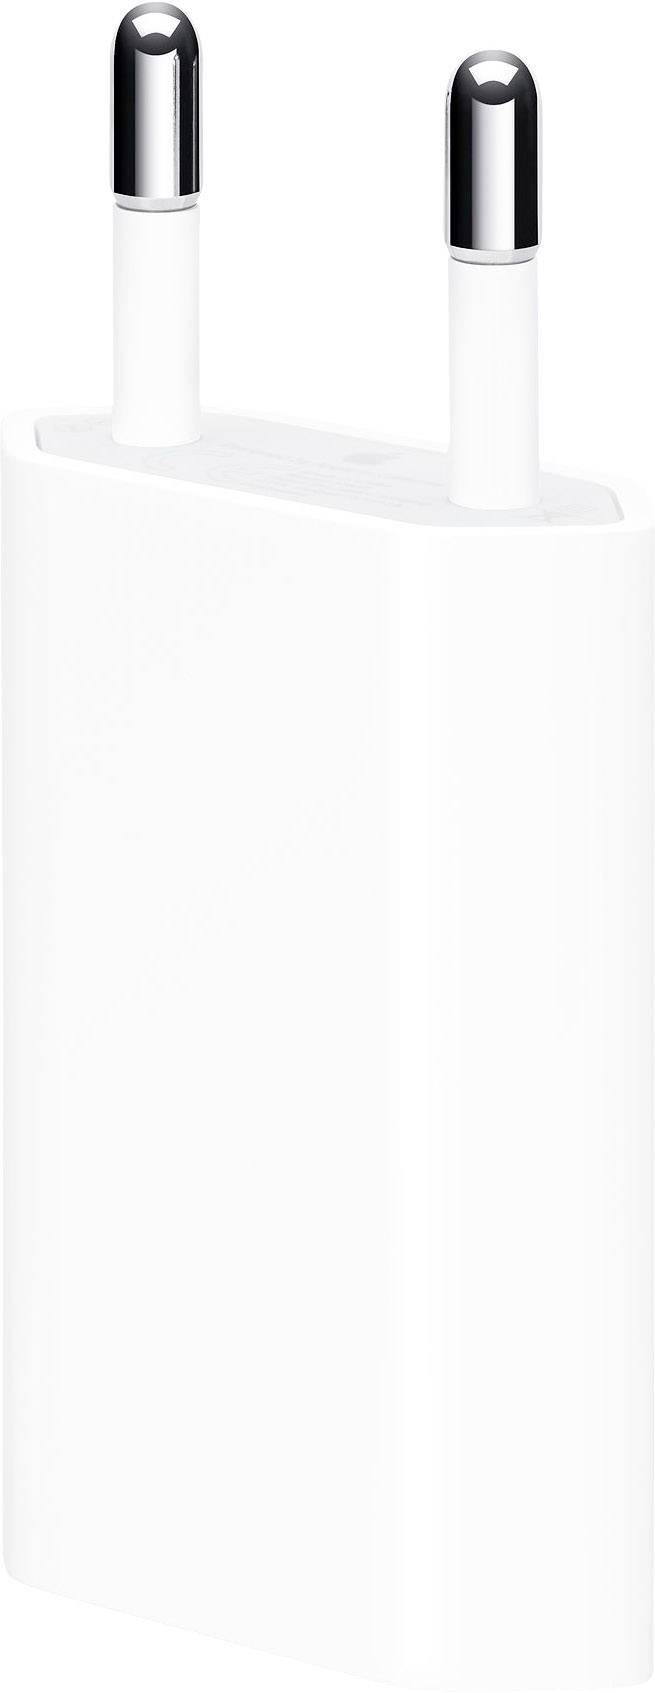 Apple 5W USB Power Adapter Adaptateur de charge Adapté pour type d'appareil  Apple: iPhone, iPod MGN13ZM/A (B) - Conrad Electronic France